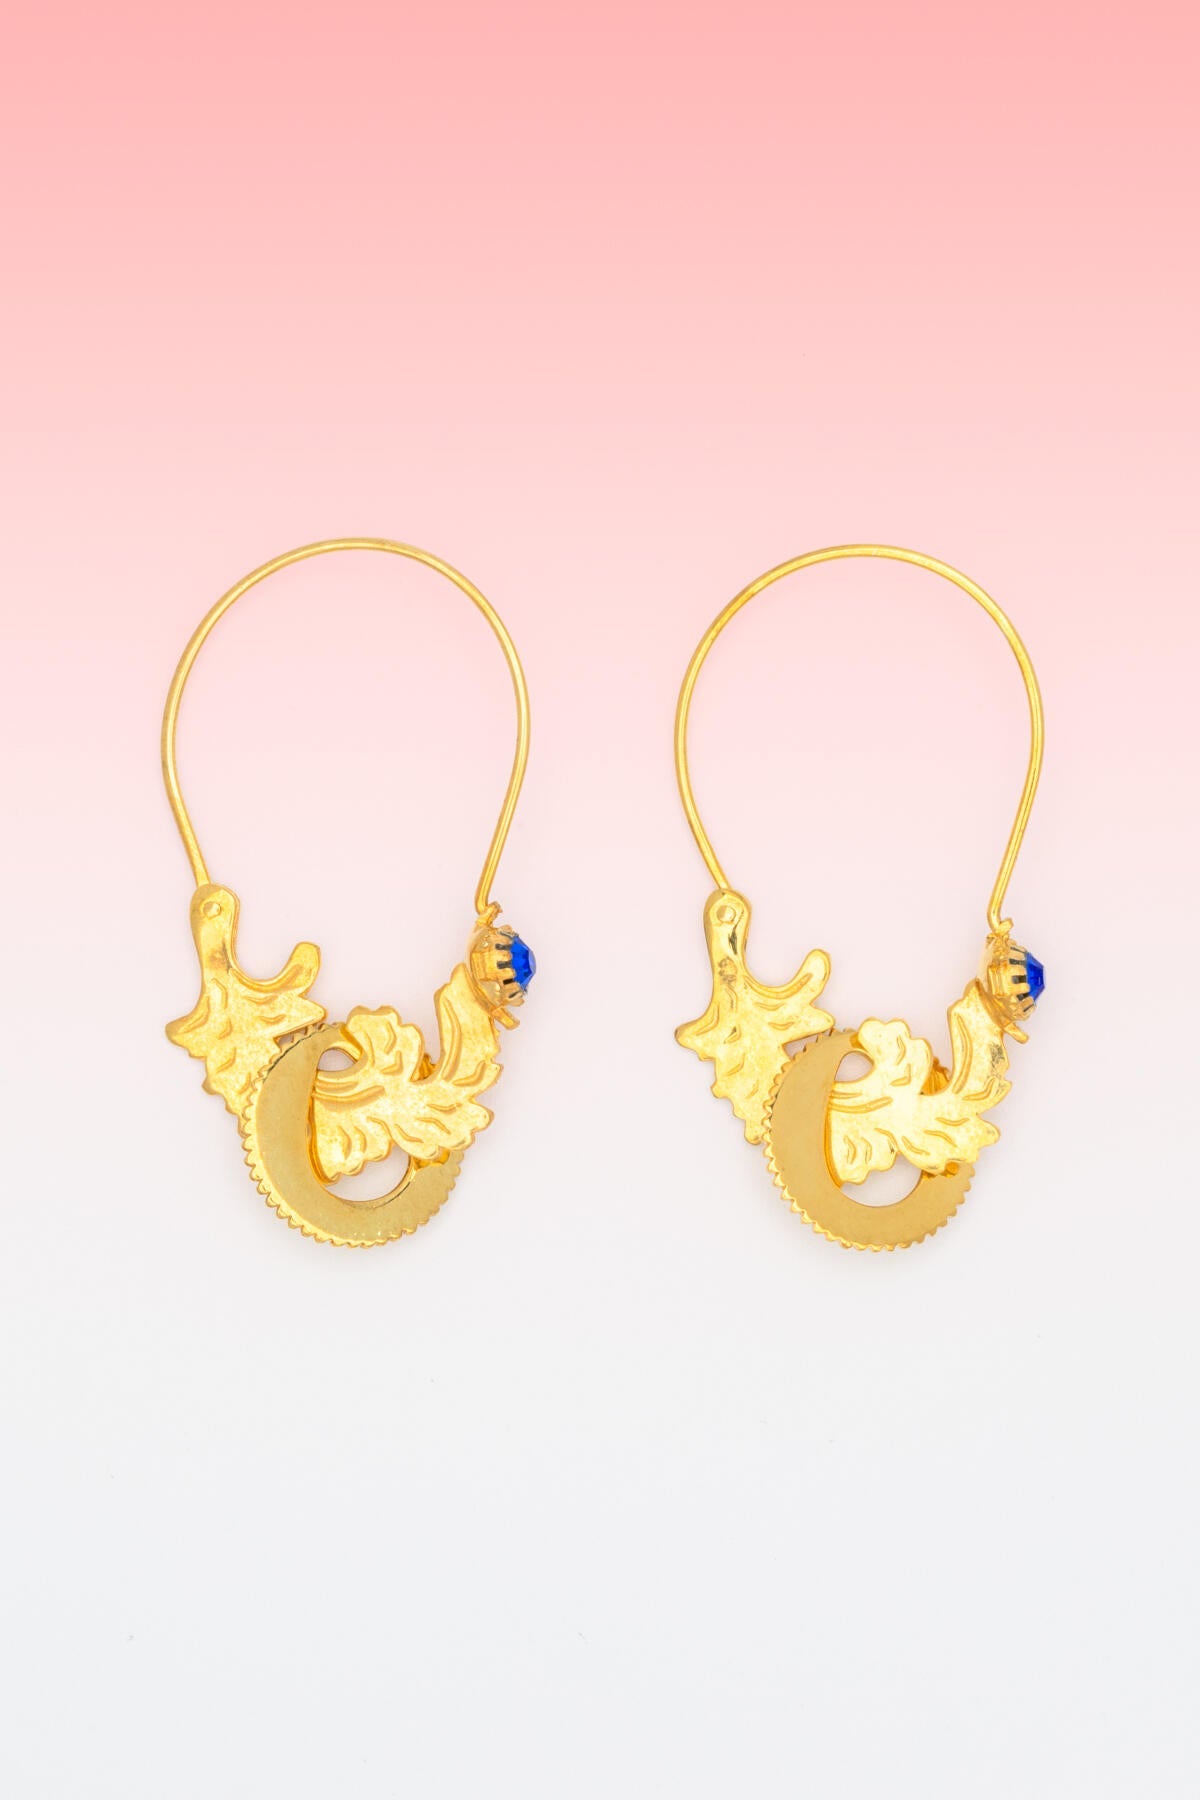 B213_Small Gold Jagged Hoop Earrings_L_01